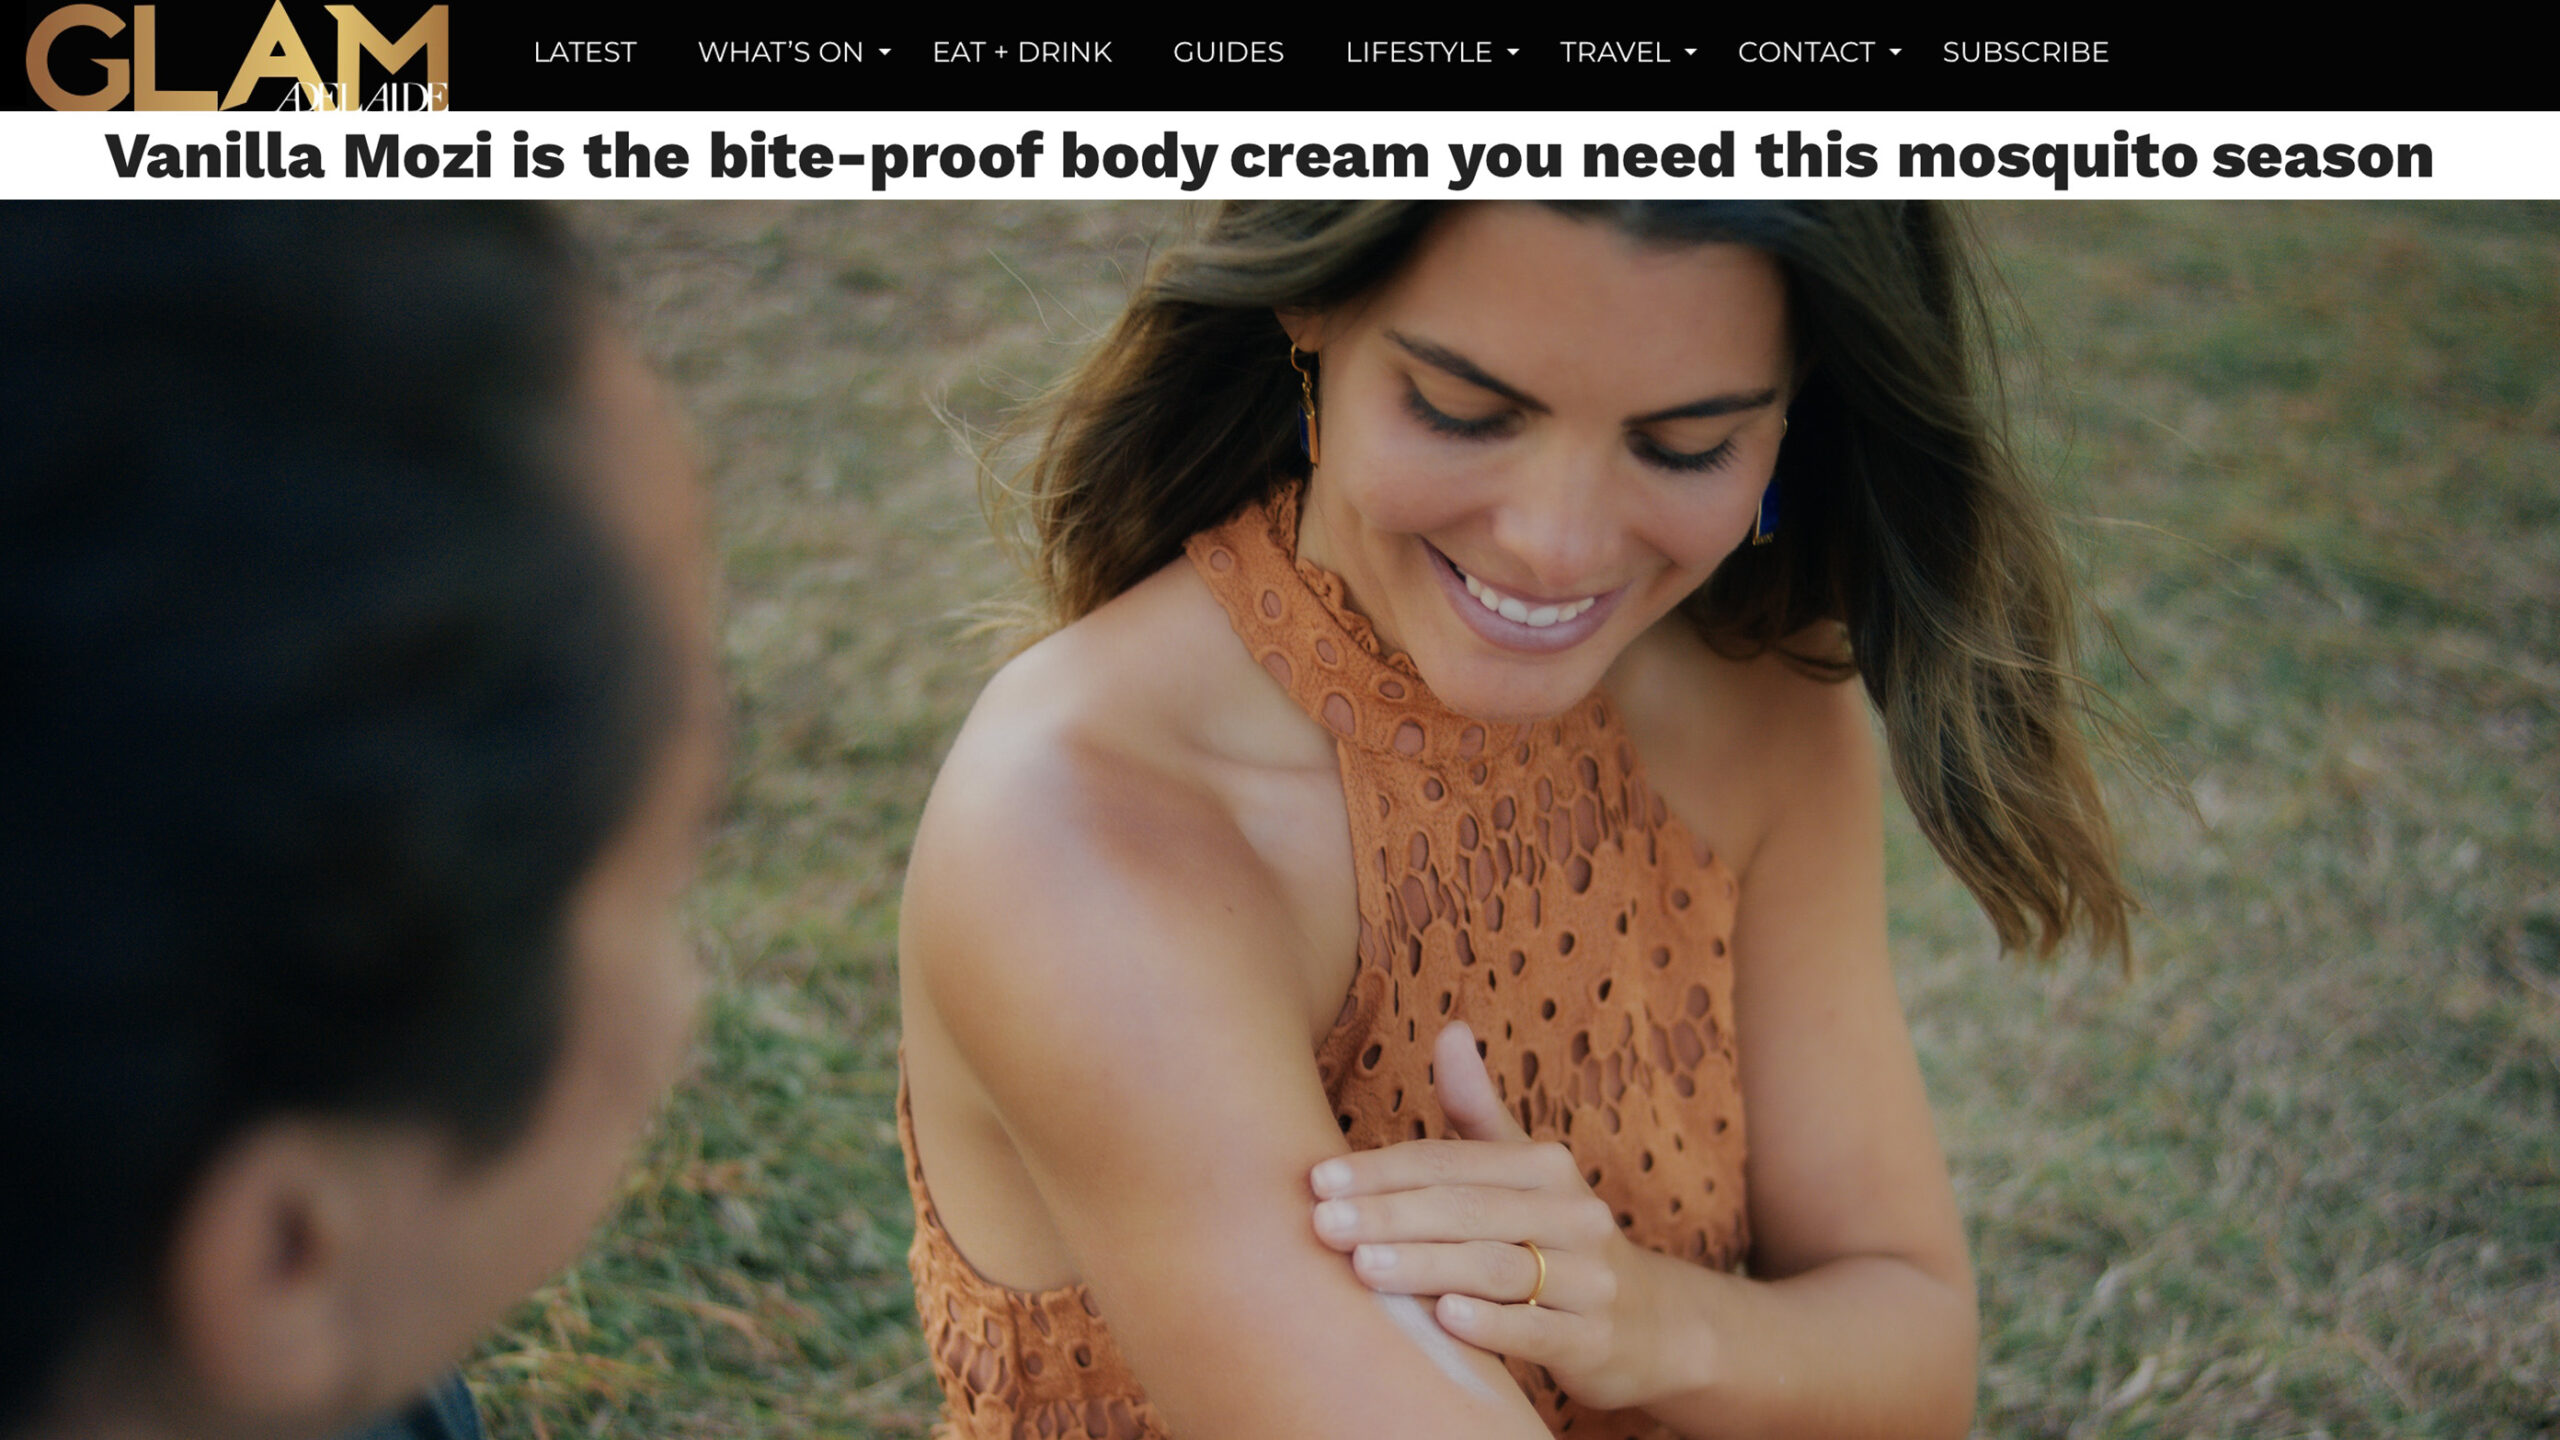 GlamAdelaide Vanilla Mozi Bite-Proof Body Cream